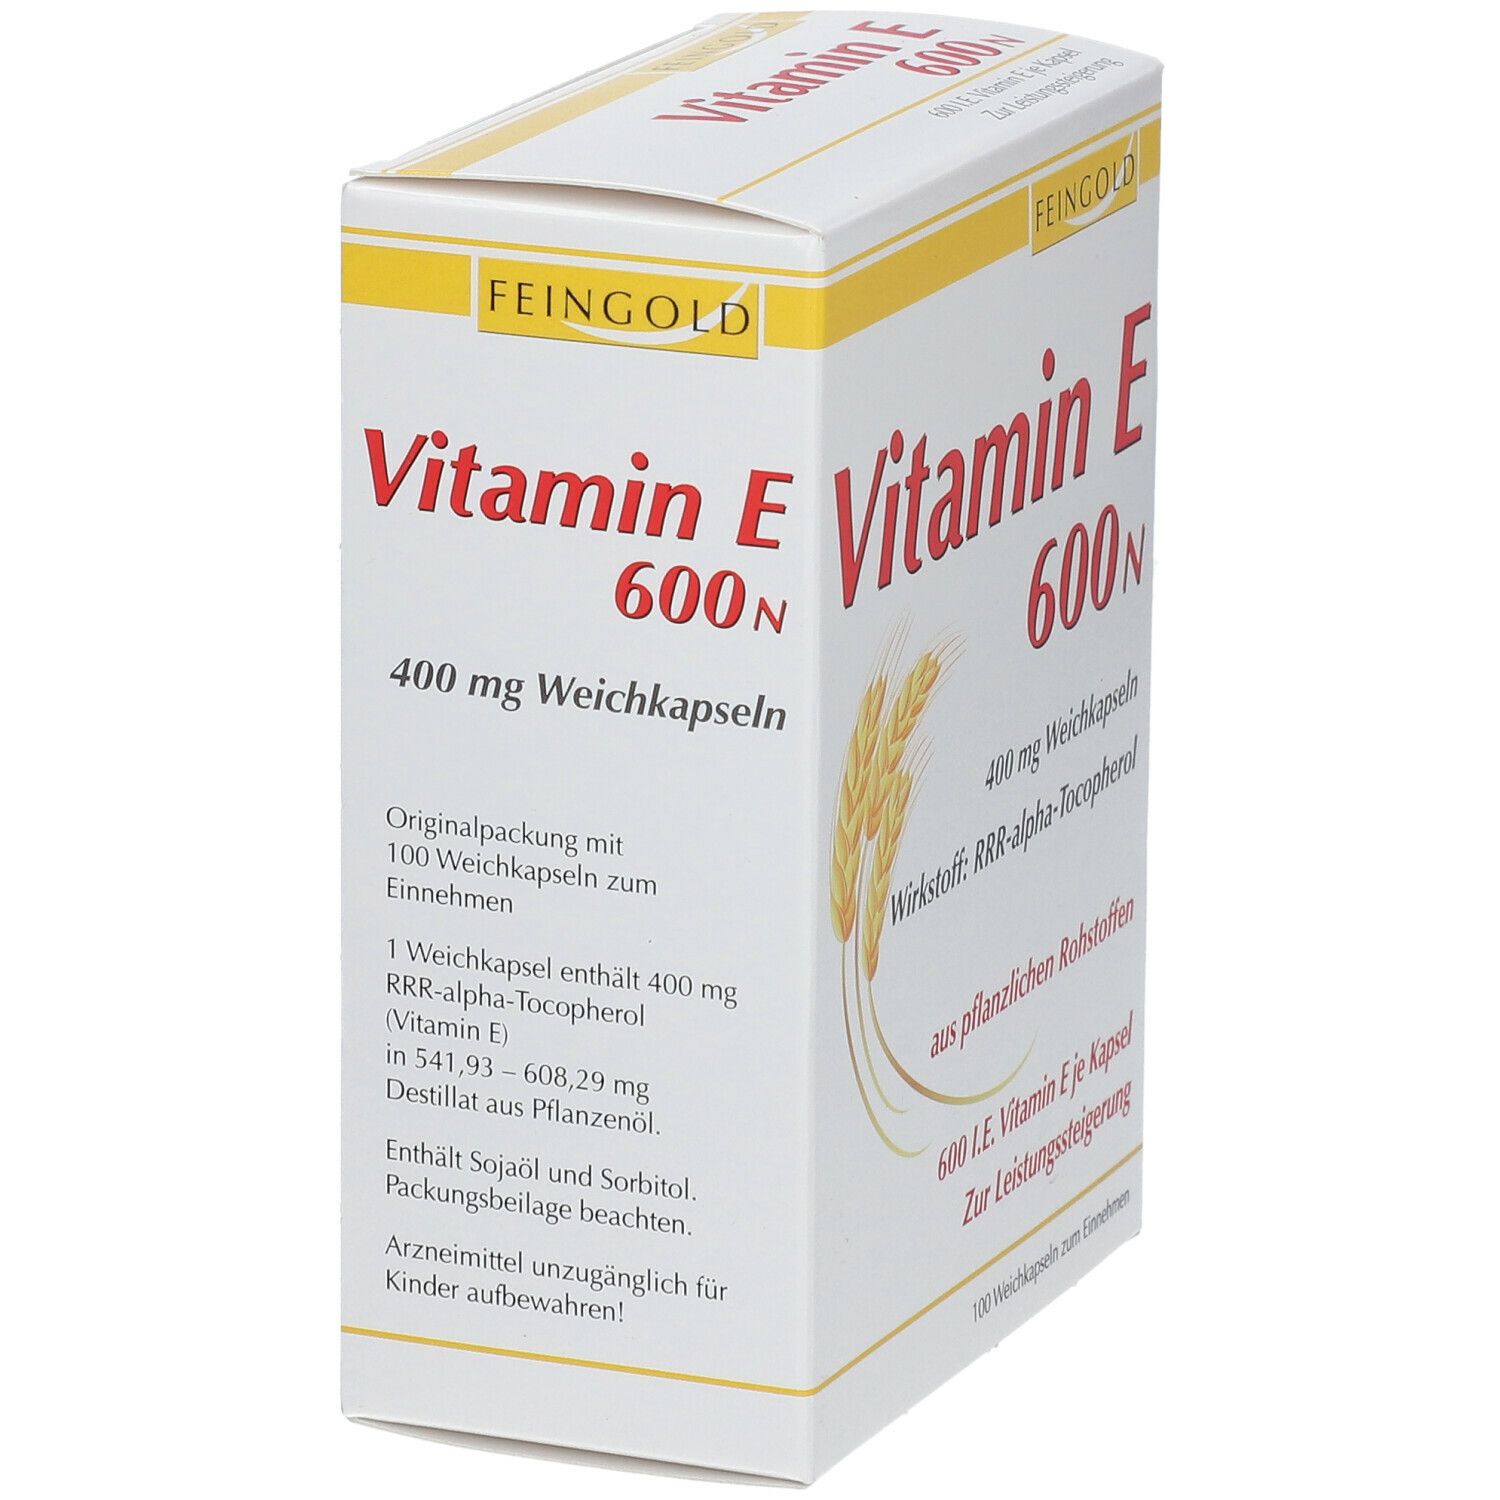 Vitamin E 600N